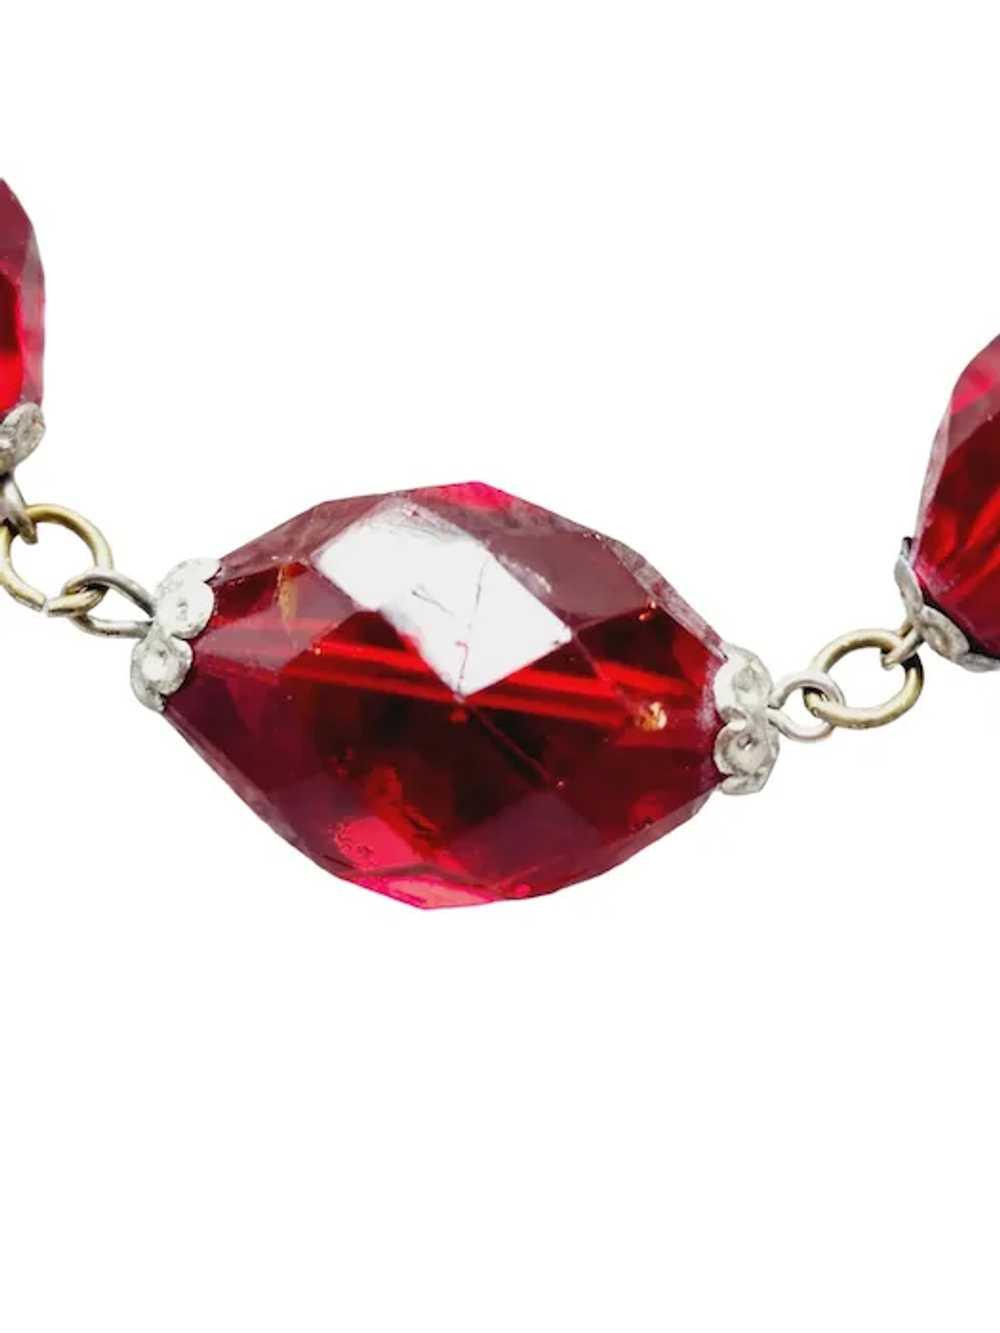 Vintage Art Deco Red Crystal Necklace [A1079] - image 3